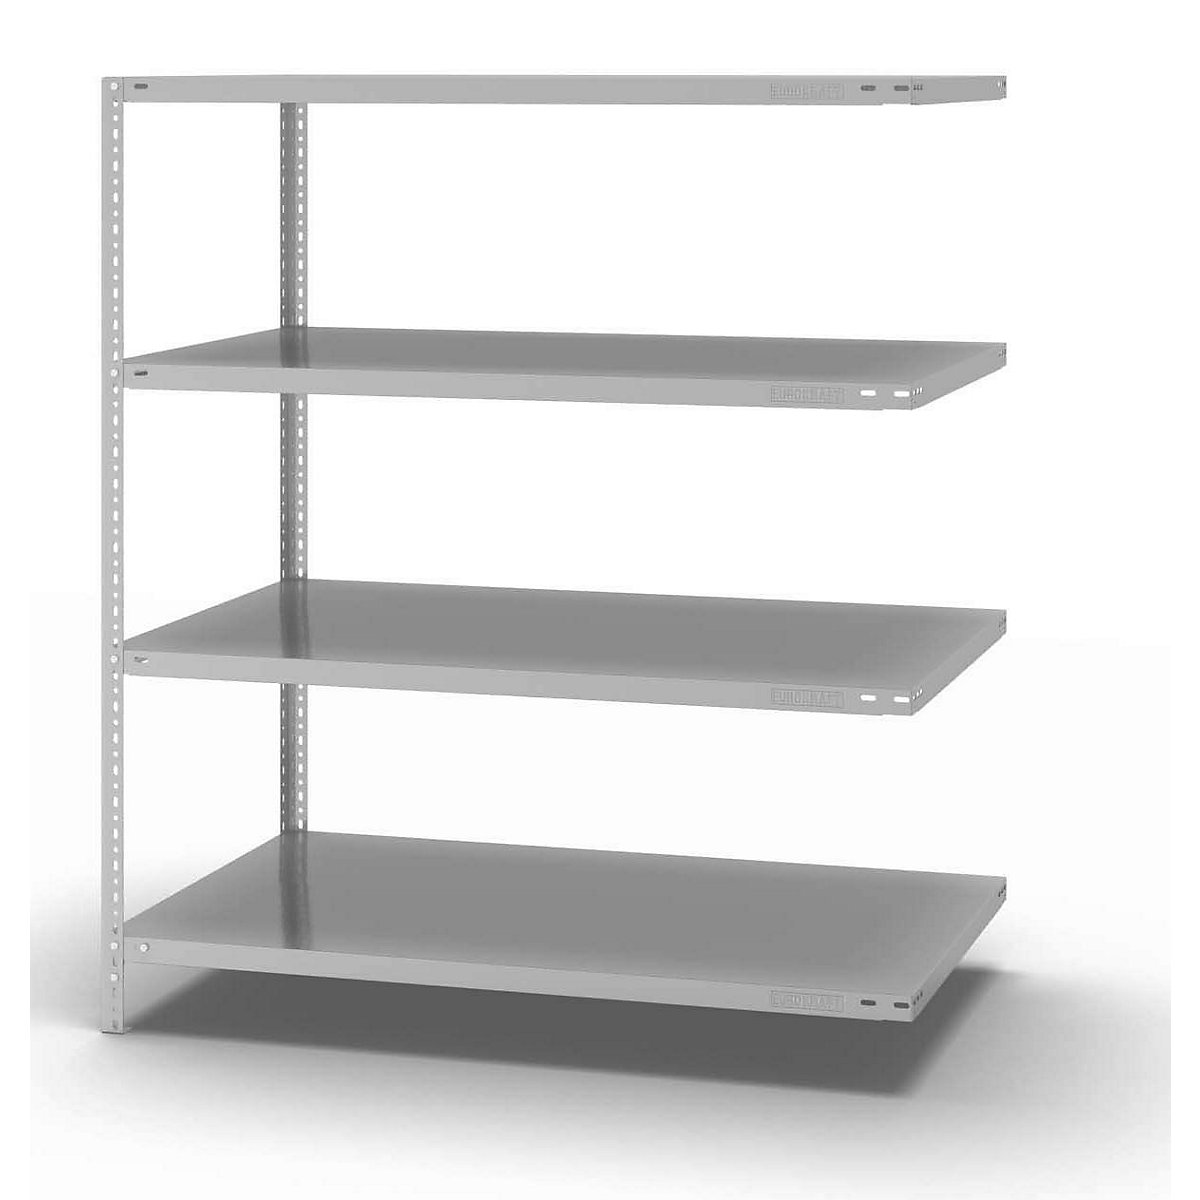 Bolt-together shelf unit, light duty, plastic coated – eurokraft pro, shelf unit height 1500 mm, shelf width 1300 mm, depth 800 mm, extension shelf unit-12